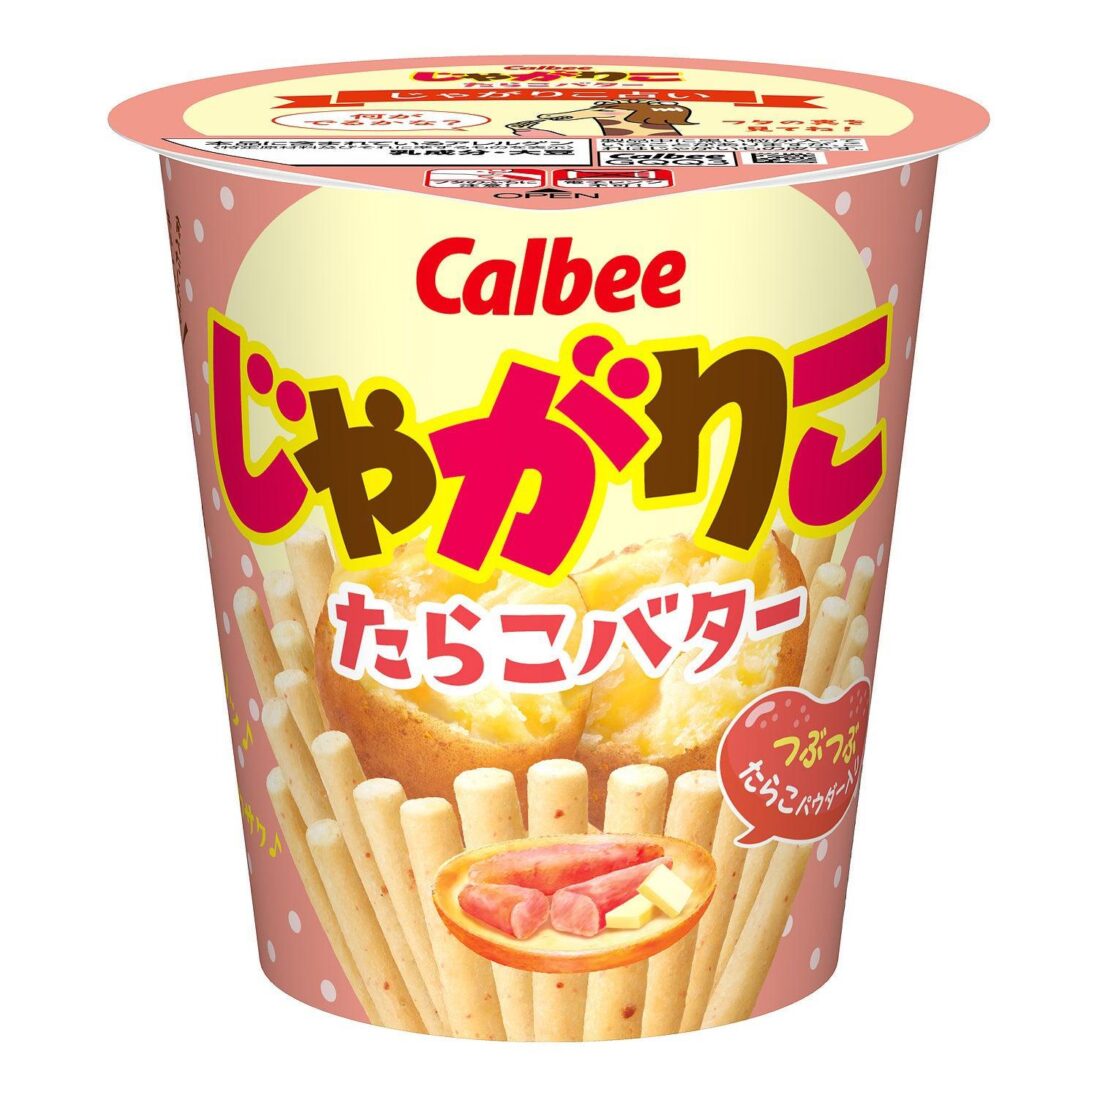 Calbee Jagarico Potato Sticks Snack Tarako Butter Flavor 52g